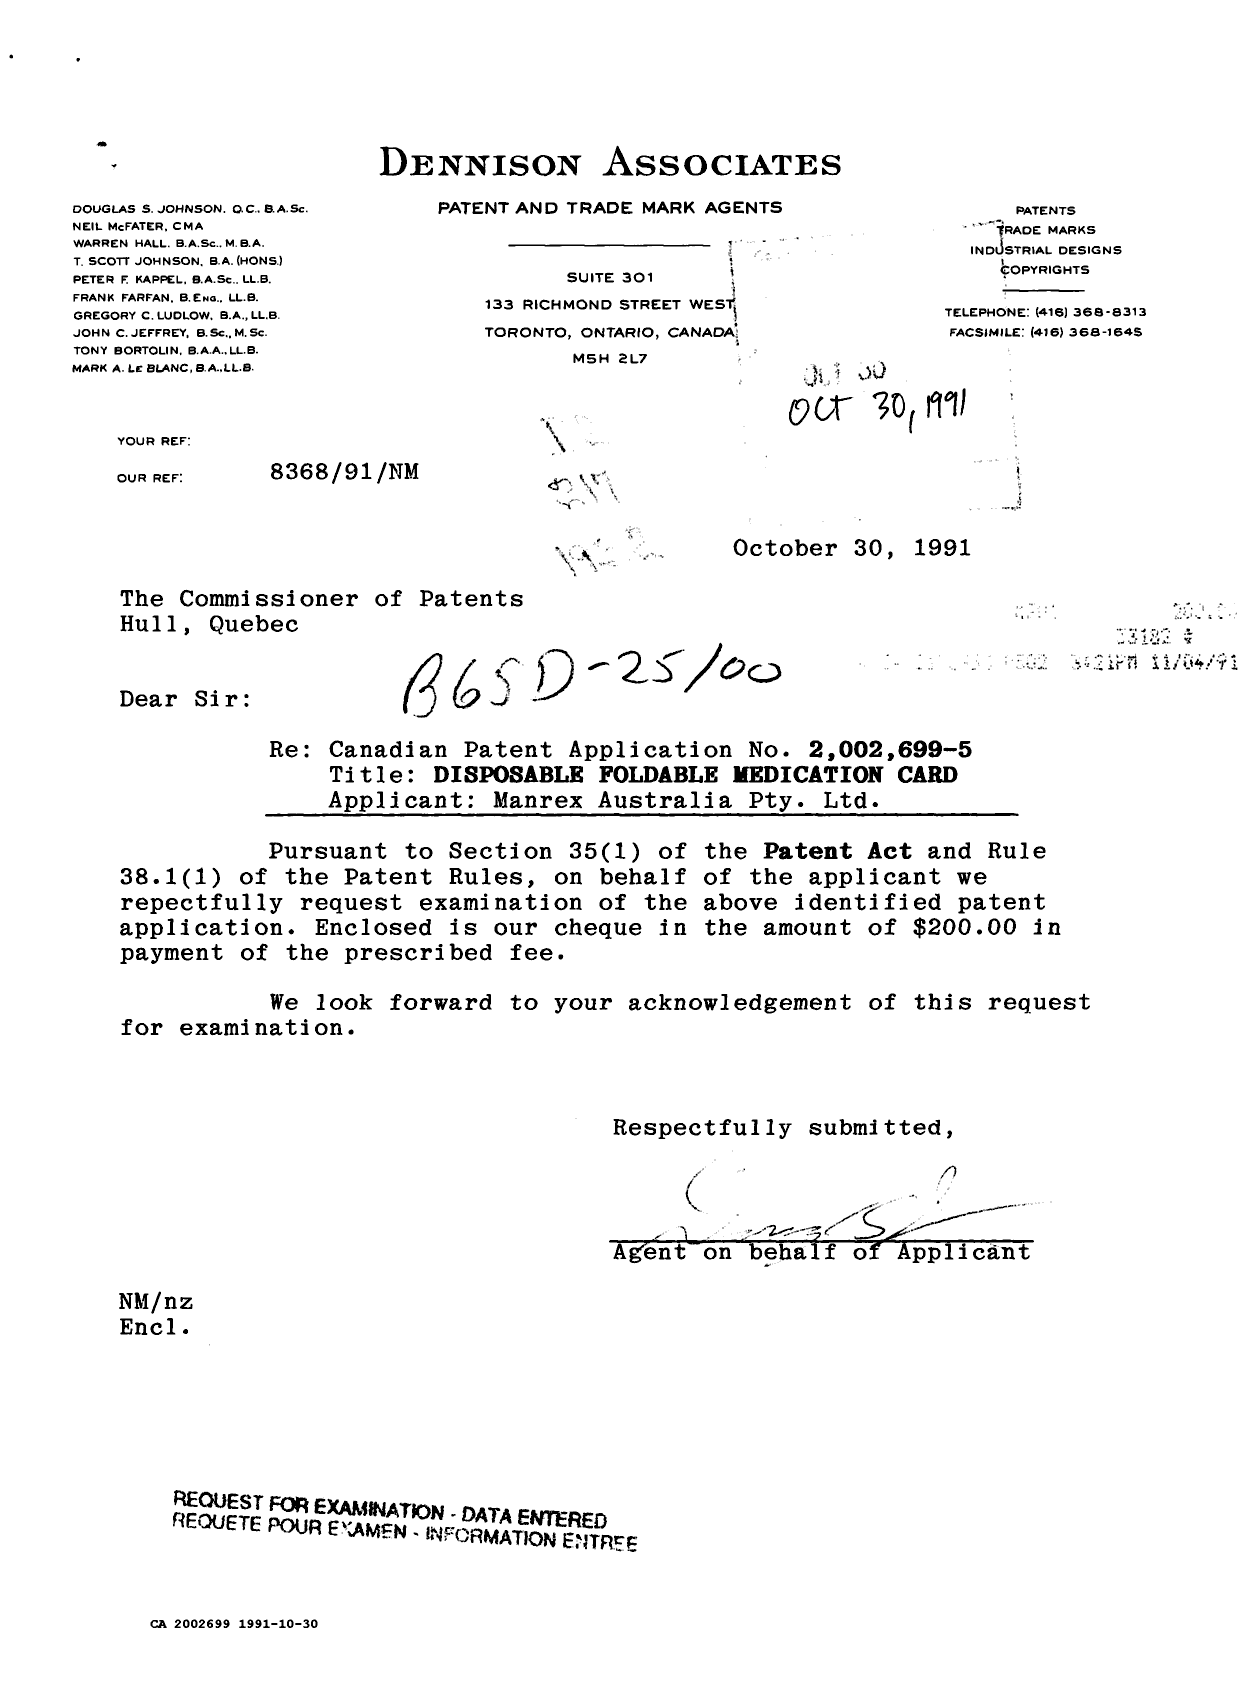 Canadian Patent Document 2002699. Prosecution Correspondence 19911030. Image 1 of 1